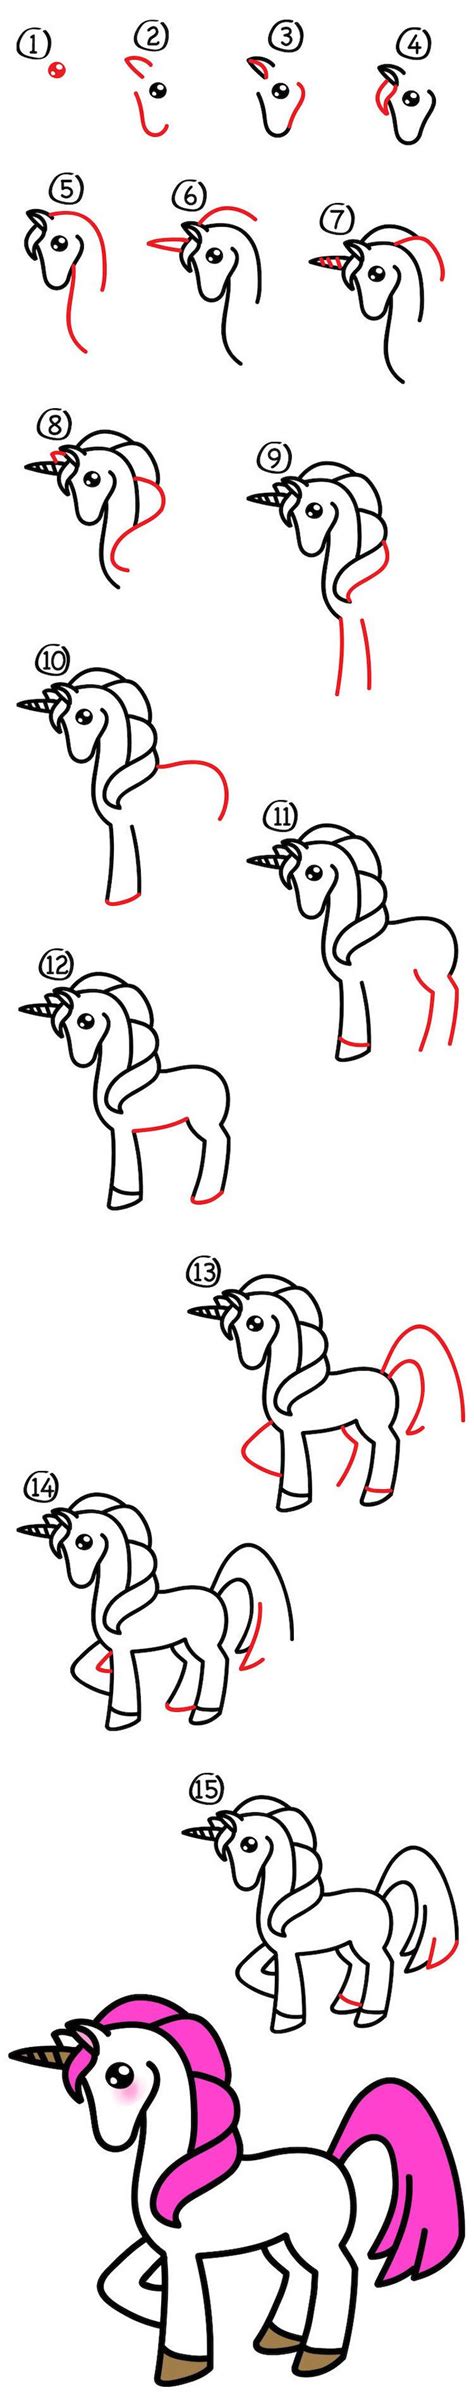 Steps to draw a unicorn cartoon. 1001+ ideas on how to draw a unicorn + easy tutorials